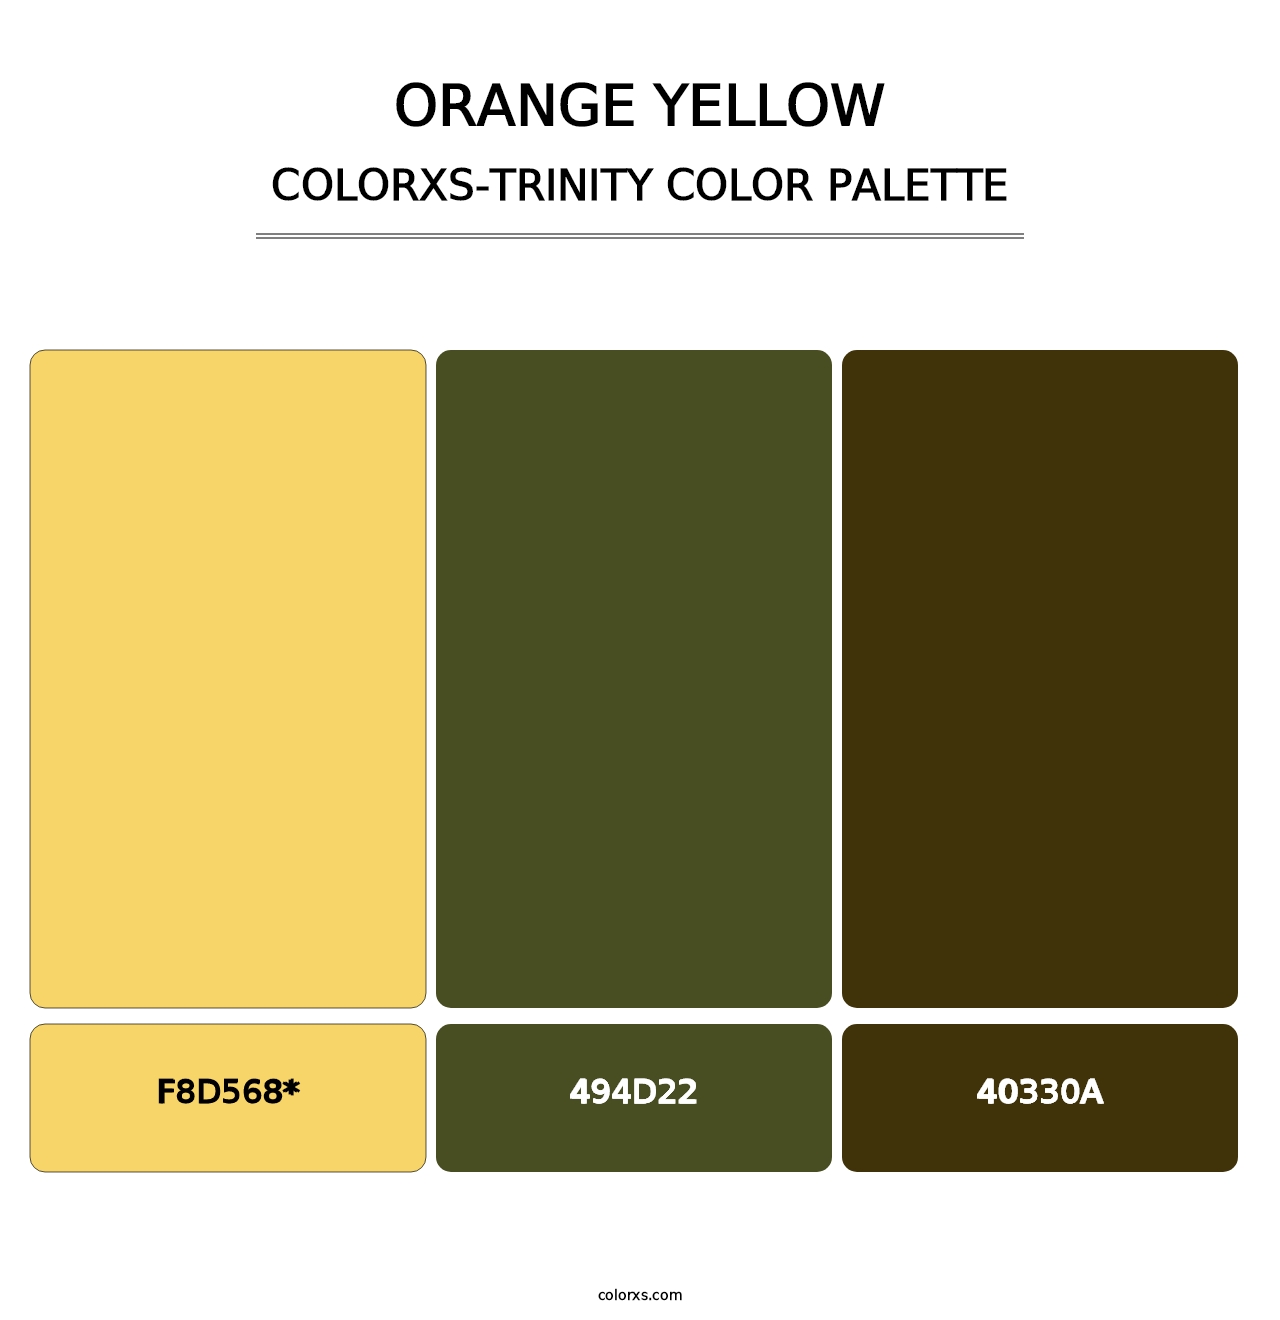 Orange Yellow - Colorxs Trinity Palette